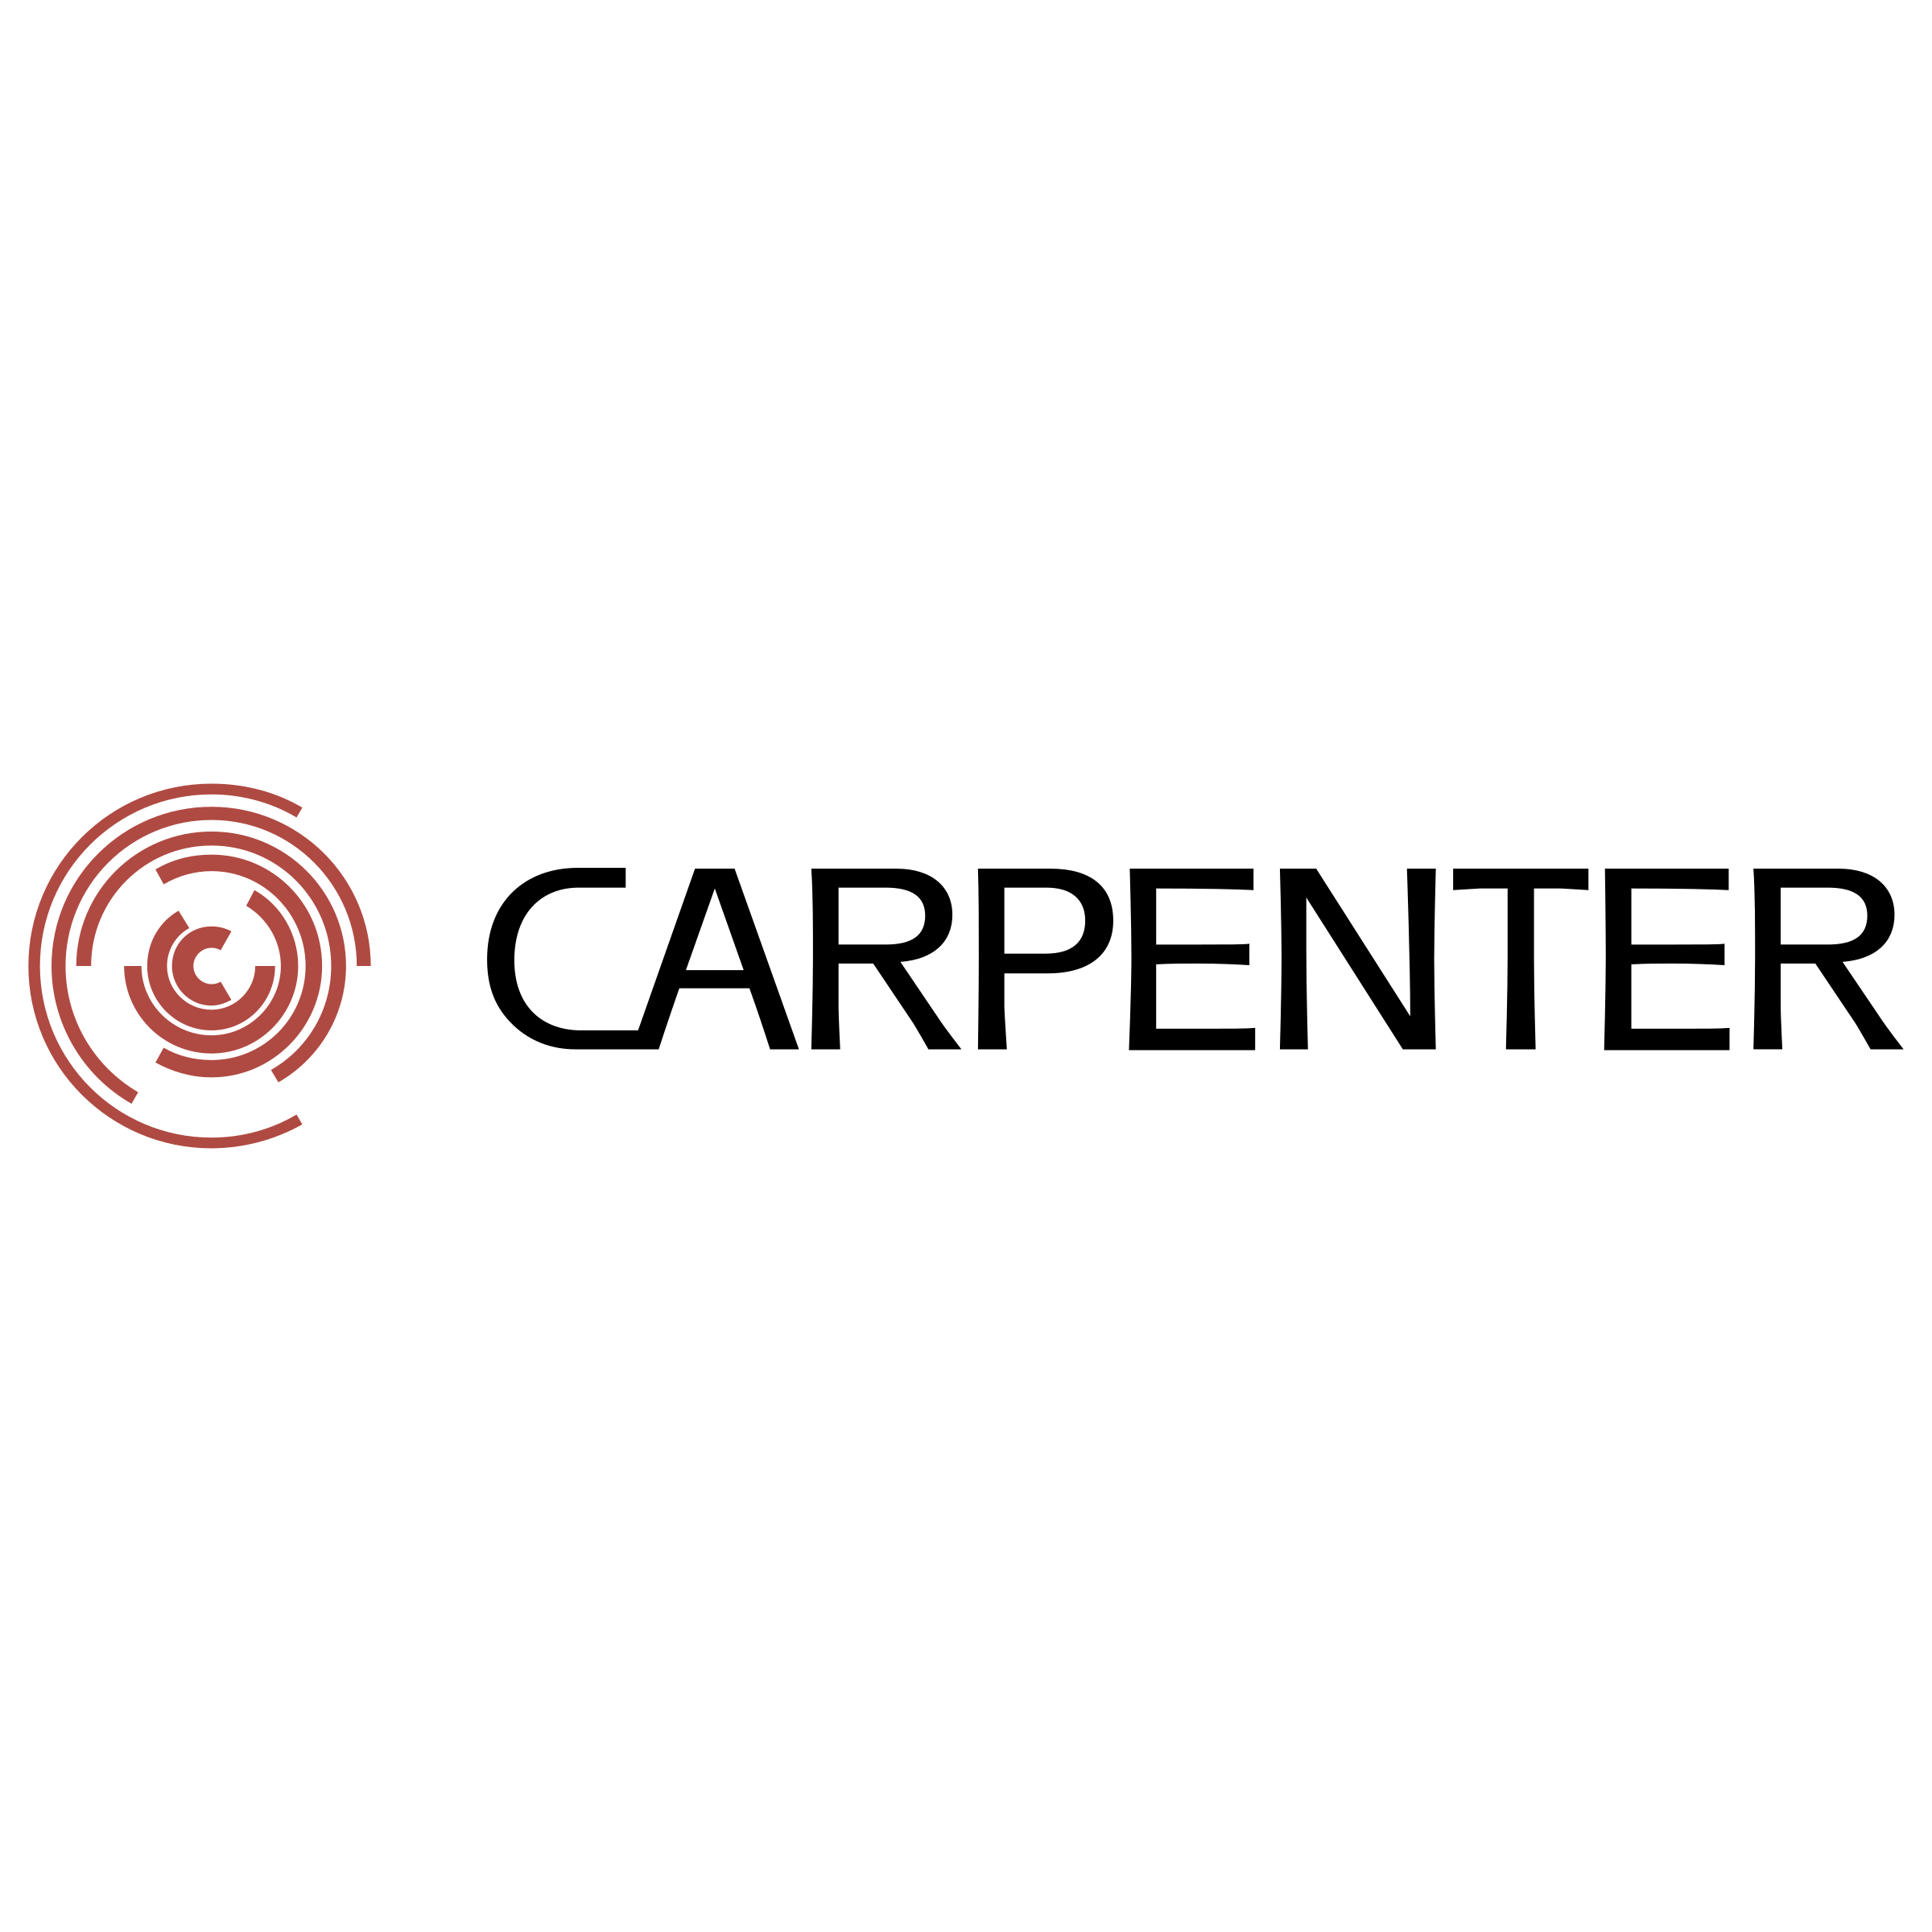 Carpenter Logo - Carpenter Logo PNG Transparent & SVG Vector - Freebie Supply